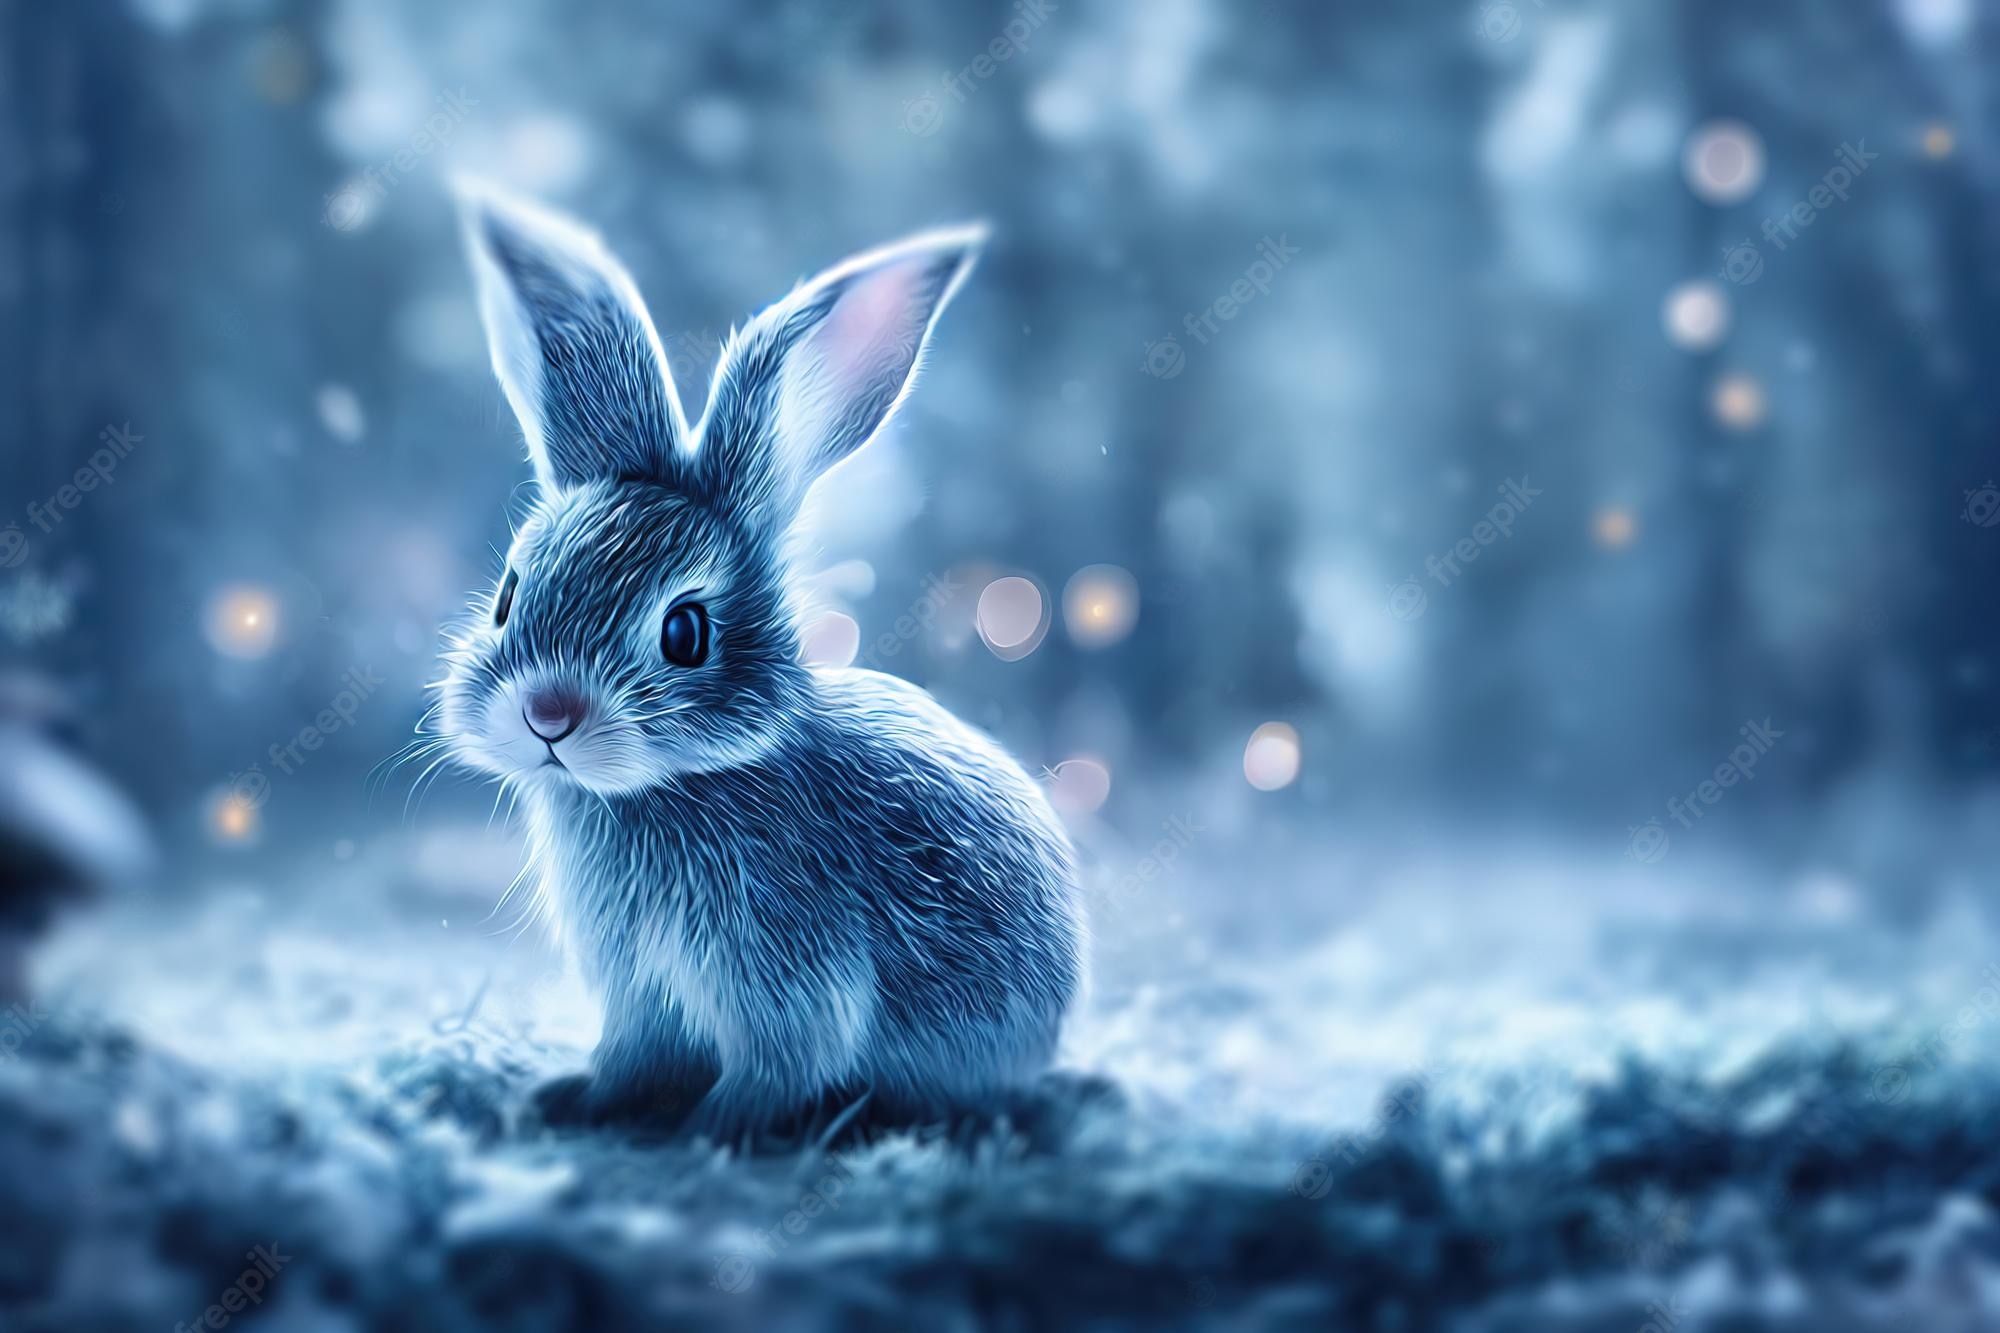 Christmas rabbit Image. Free Vectors, & PSD